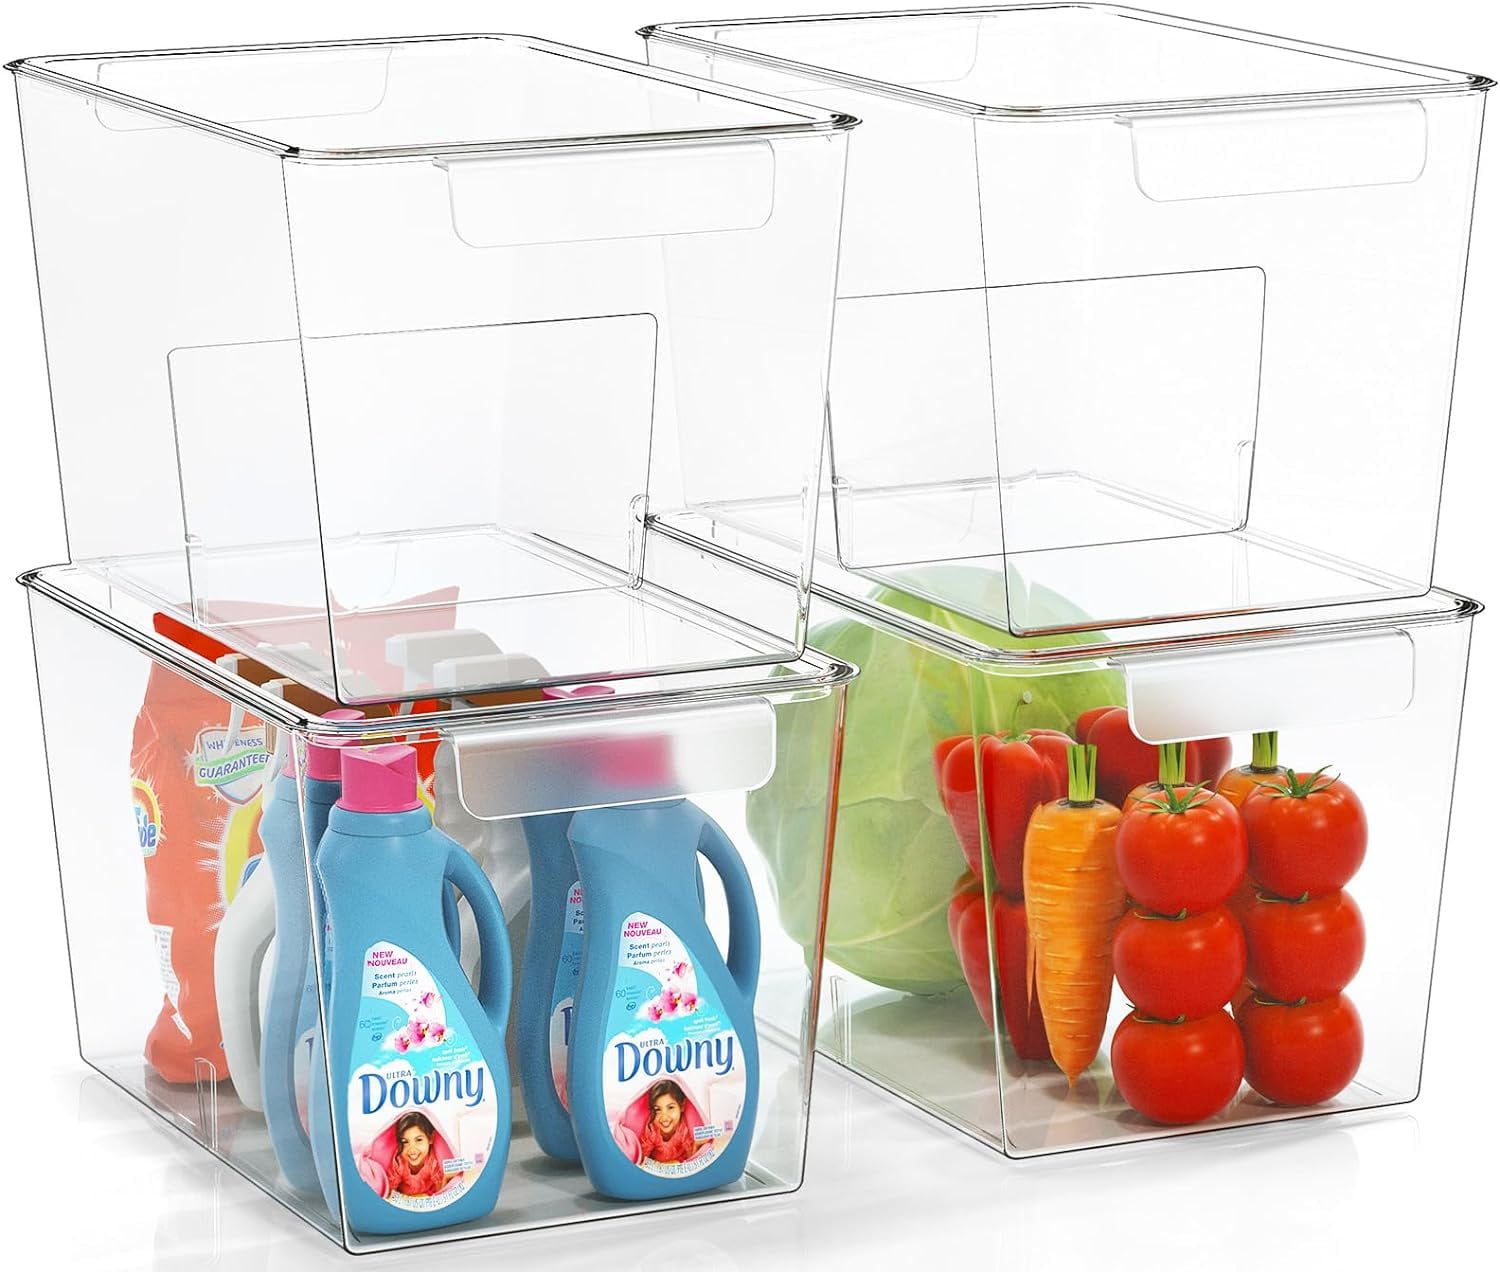 Travelwant Refrigerator Organizer Bins, Organizer Bins Stackable Fridge  Organizers with Cutout Handles for Freezer, Kitchen, Countertops, Cabinets  